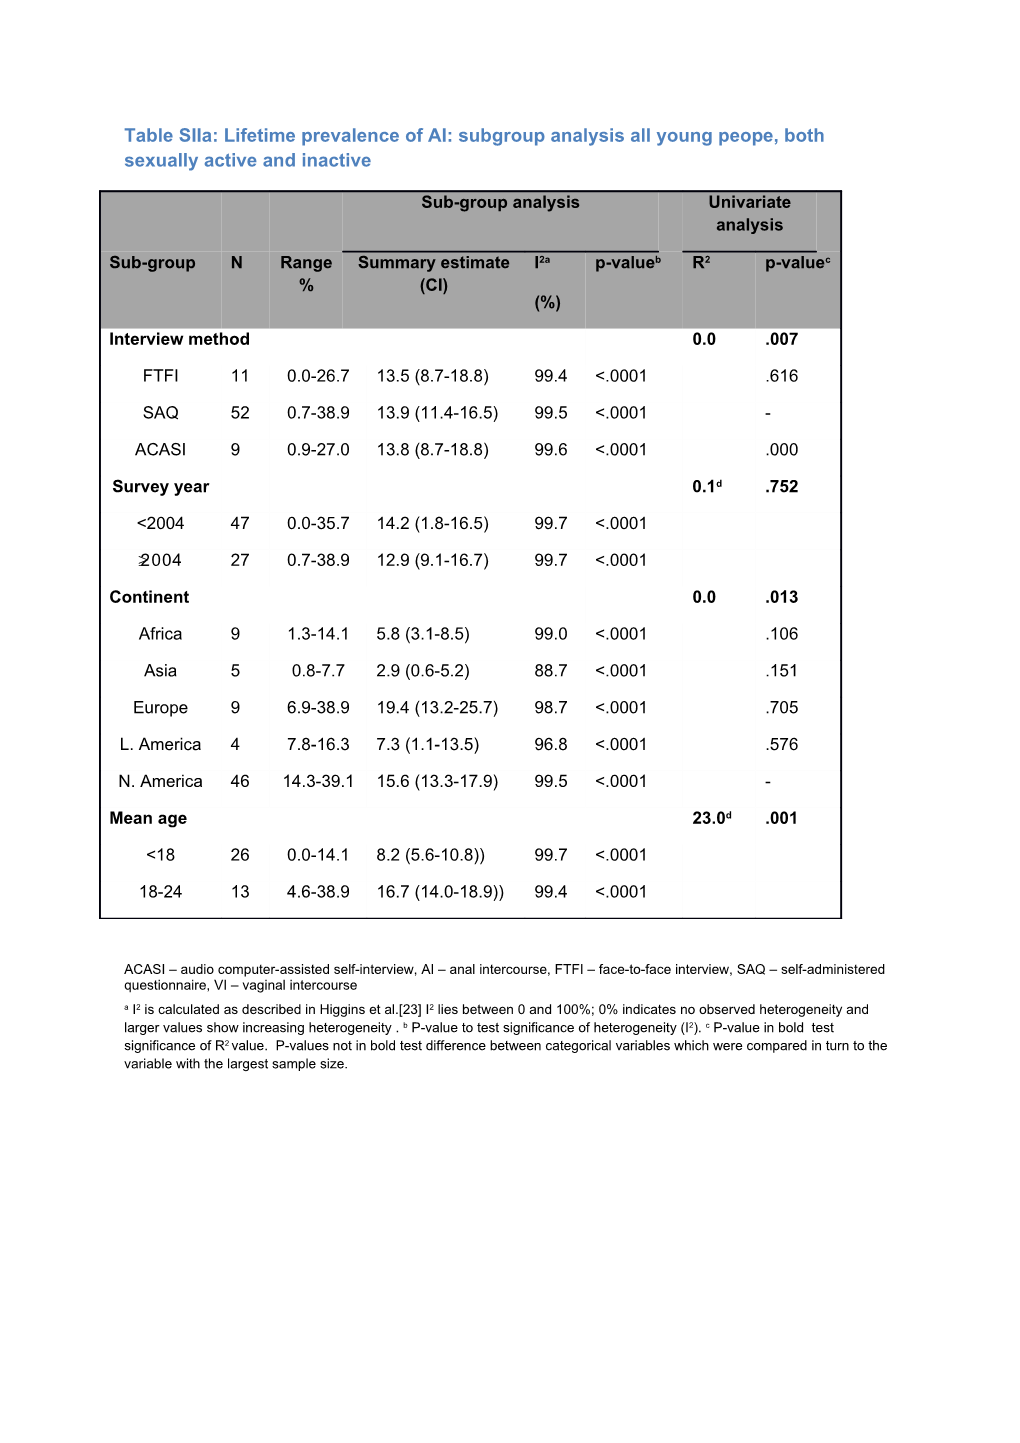 Table Siib:Lifetime Prevalence of VI: Subgroup Analysis All Young People